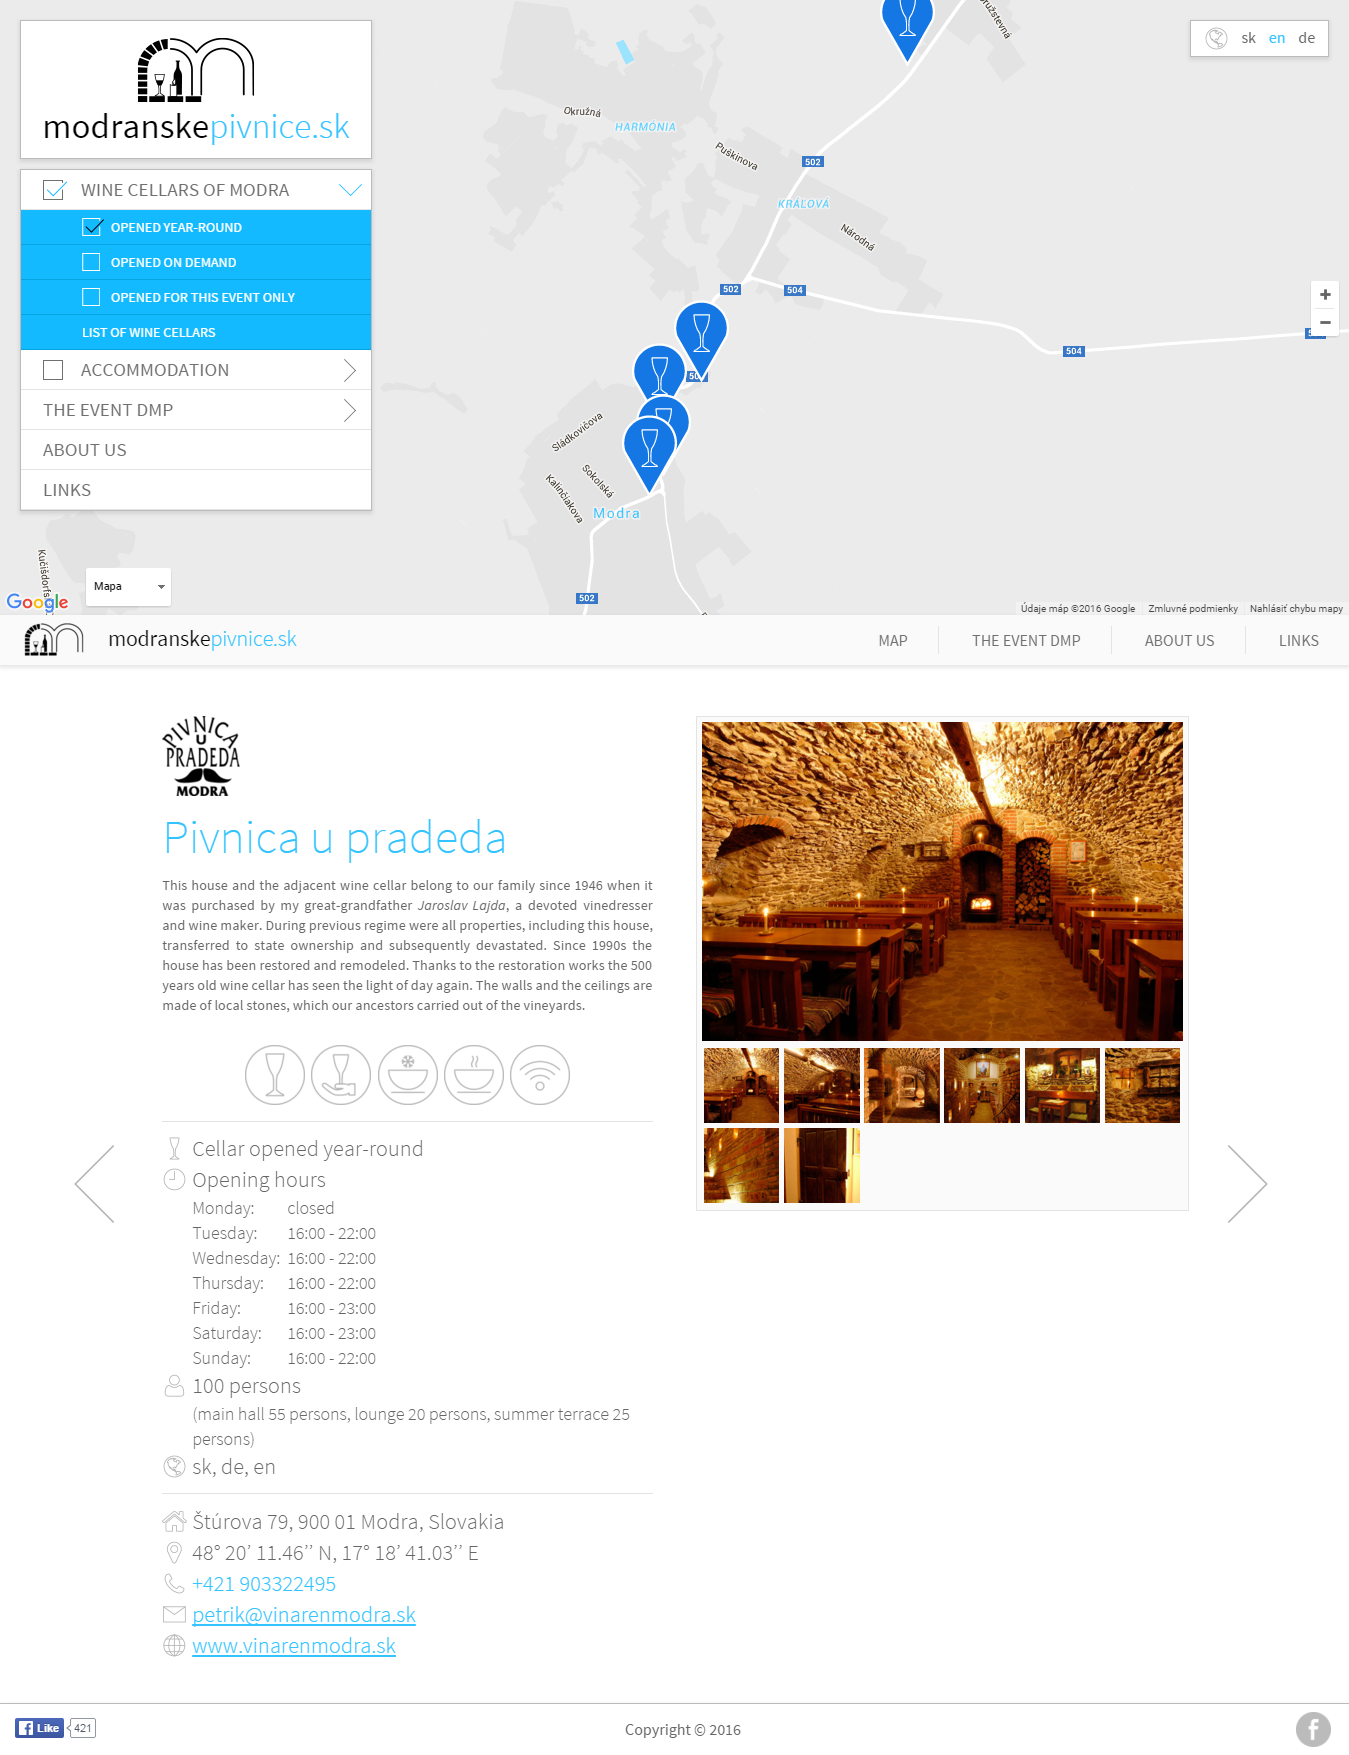 screenshot of the project Modra wine cellars